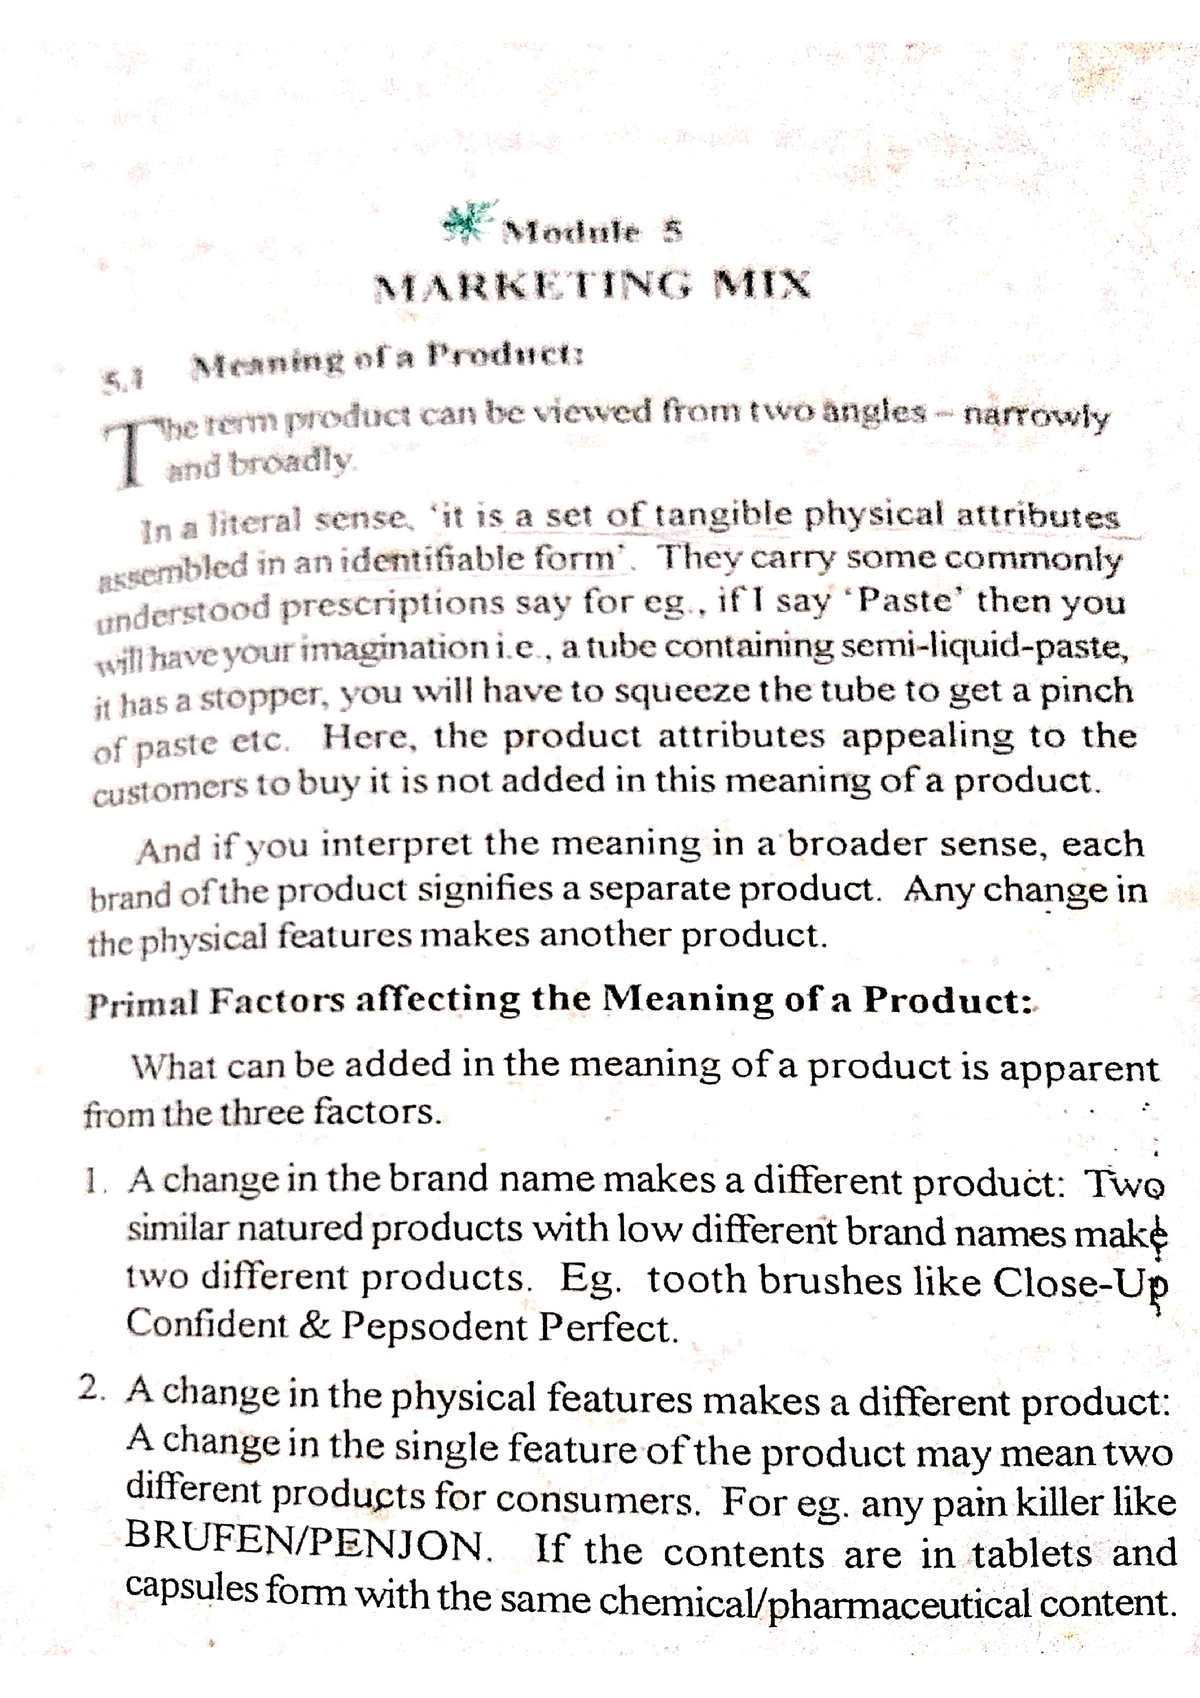 thesis marketing mix